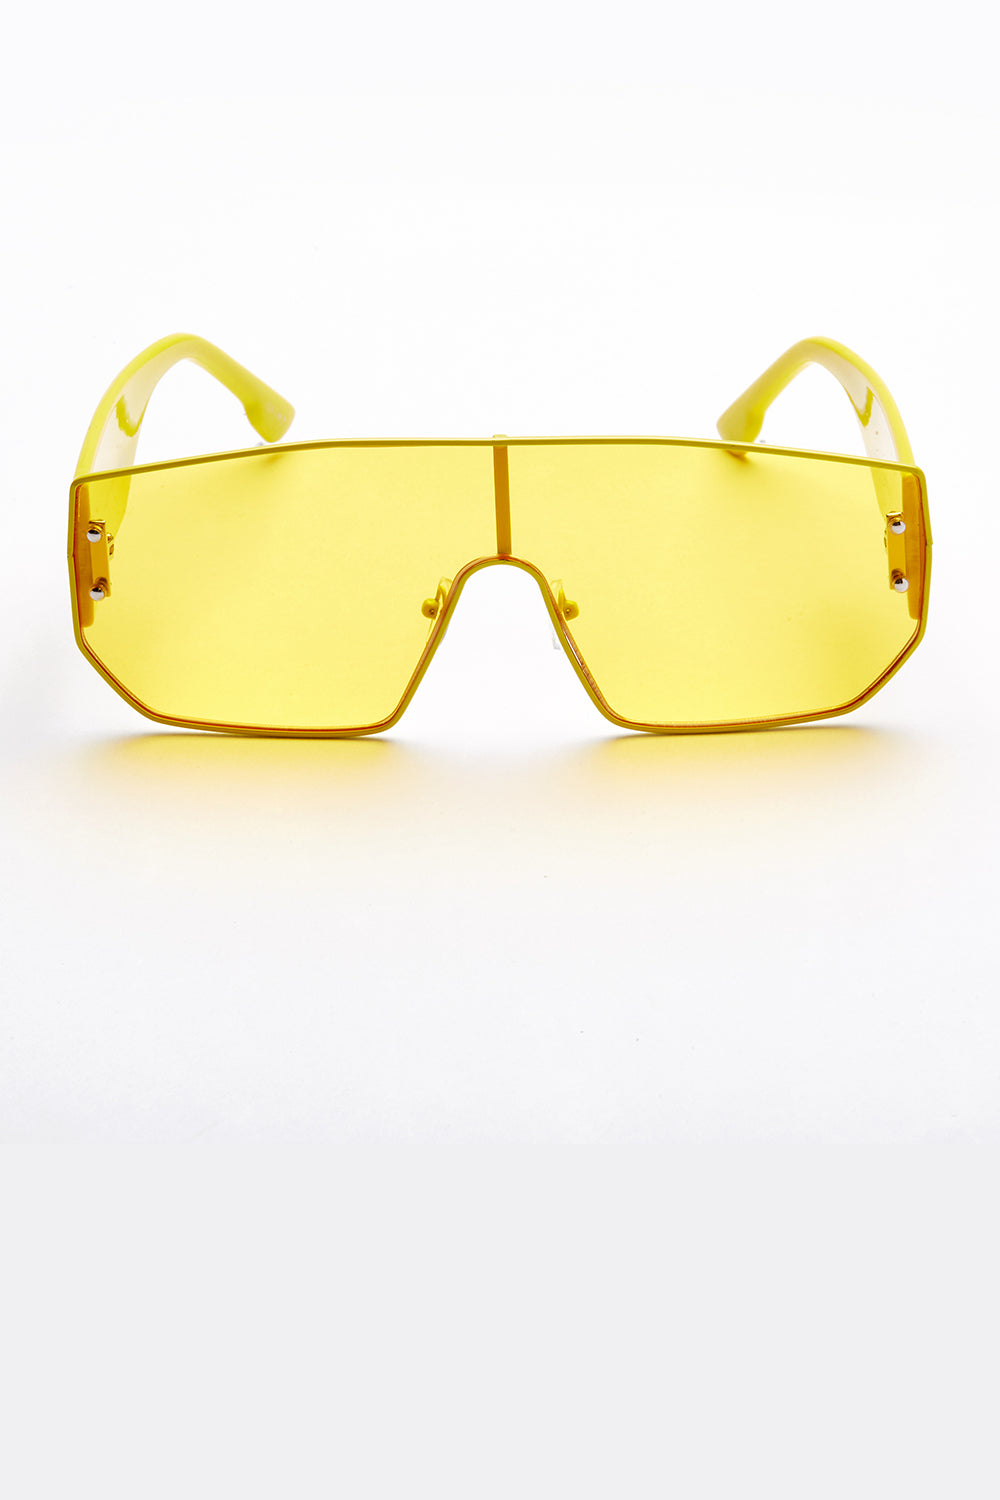 St. Moritz Sunglasses - Slick It Up 